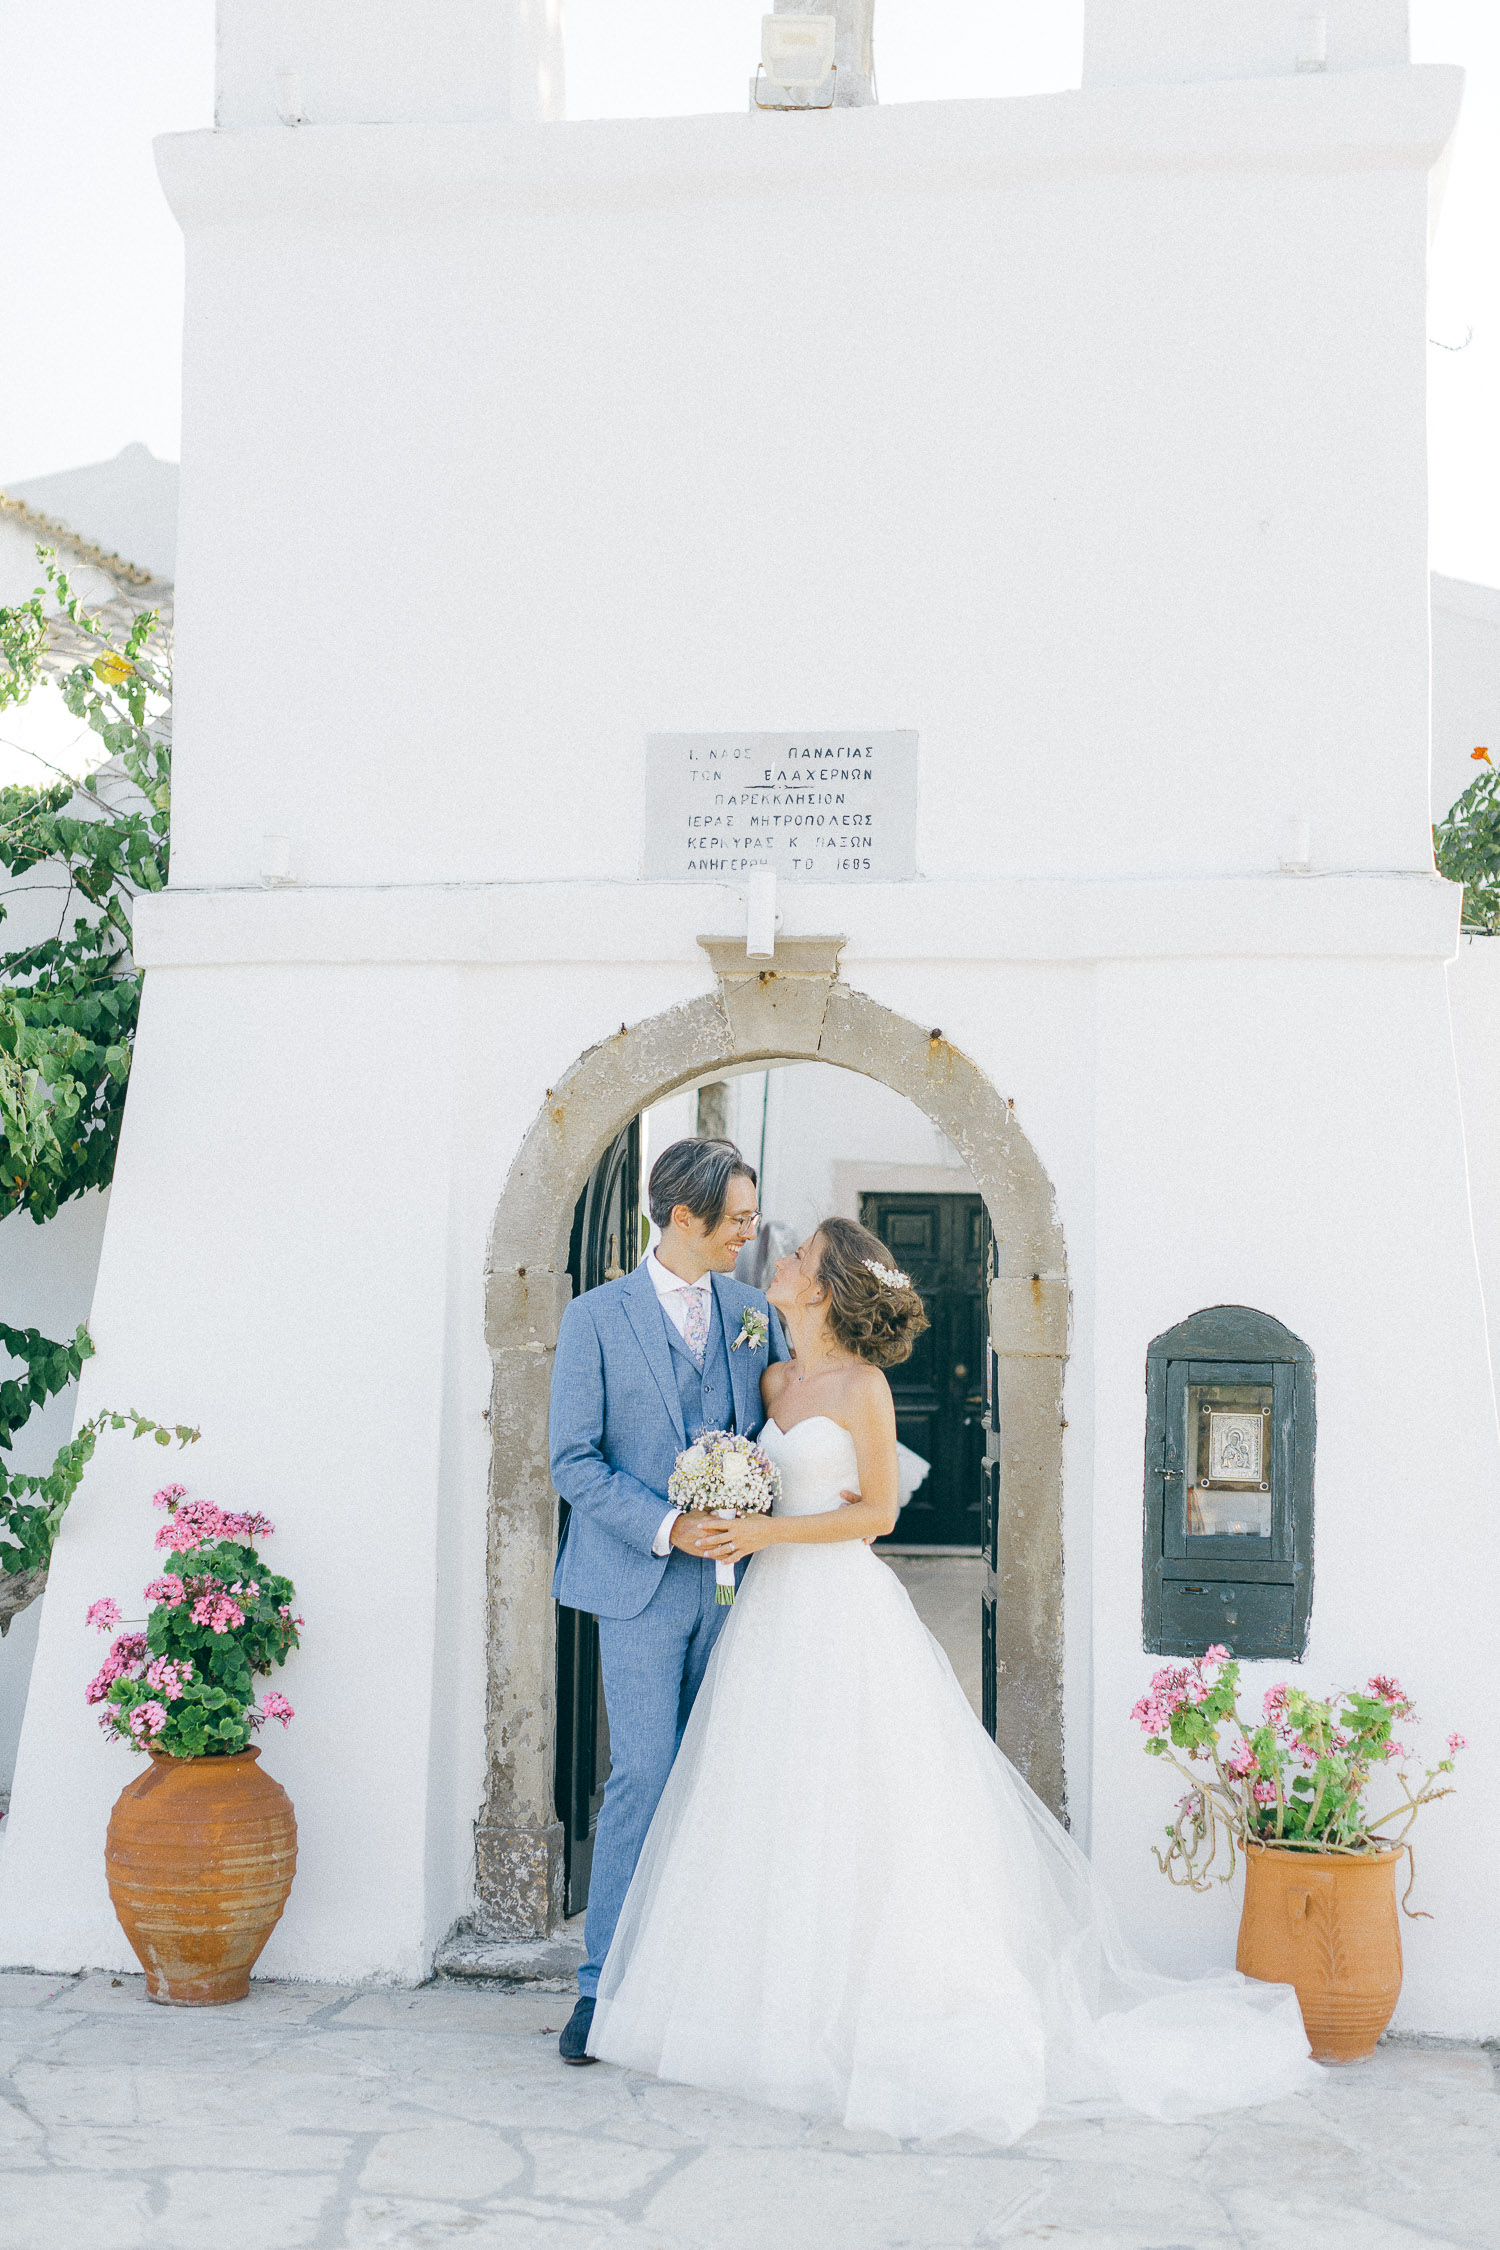 Just married couple posing so tender in front of wedding venue in Corfu Island